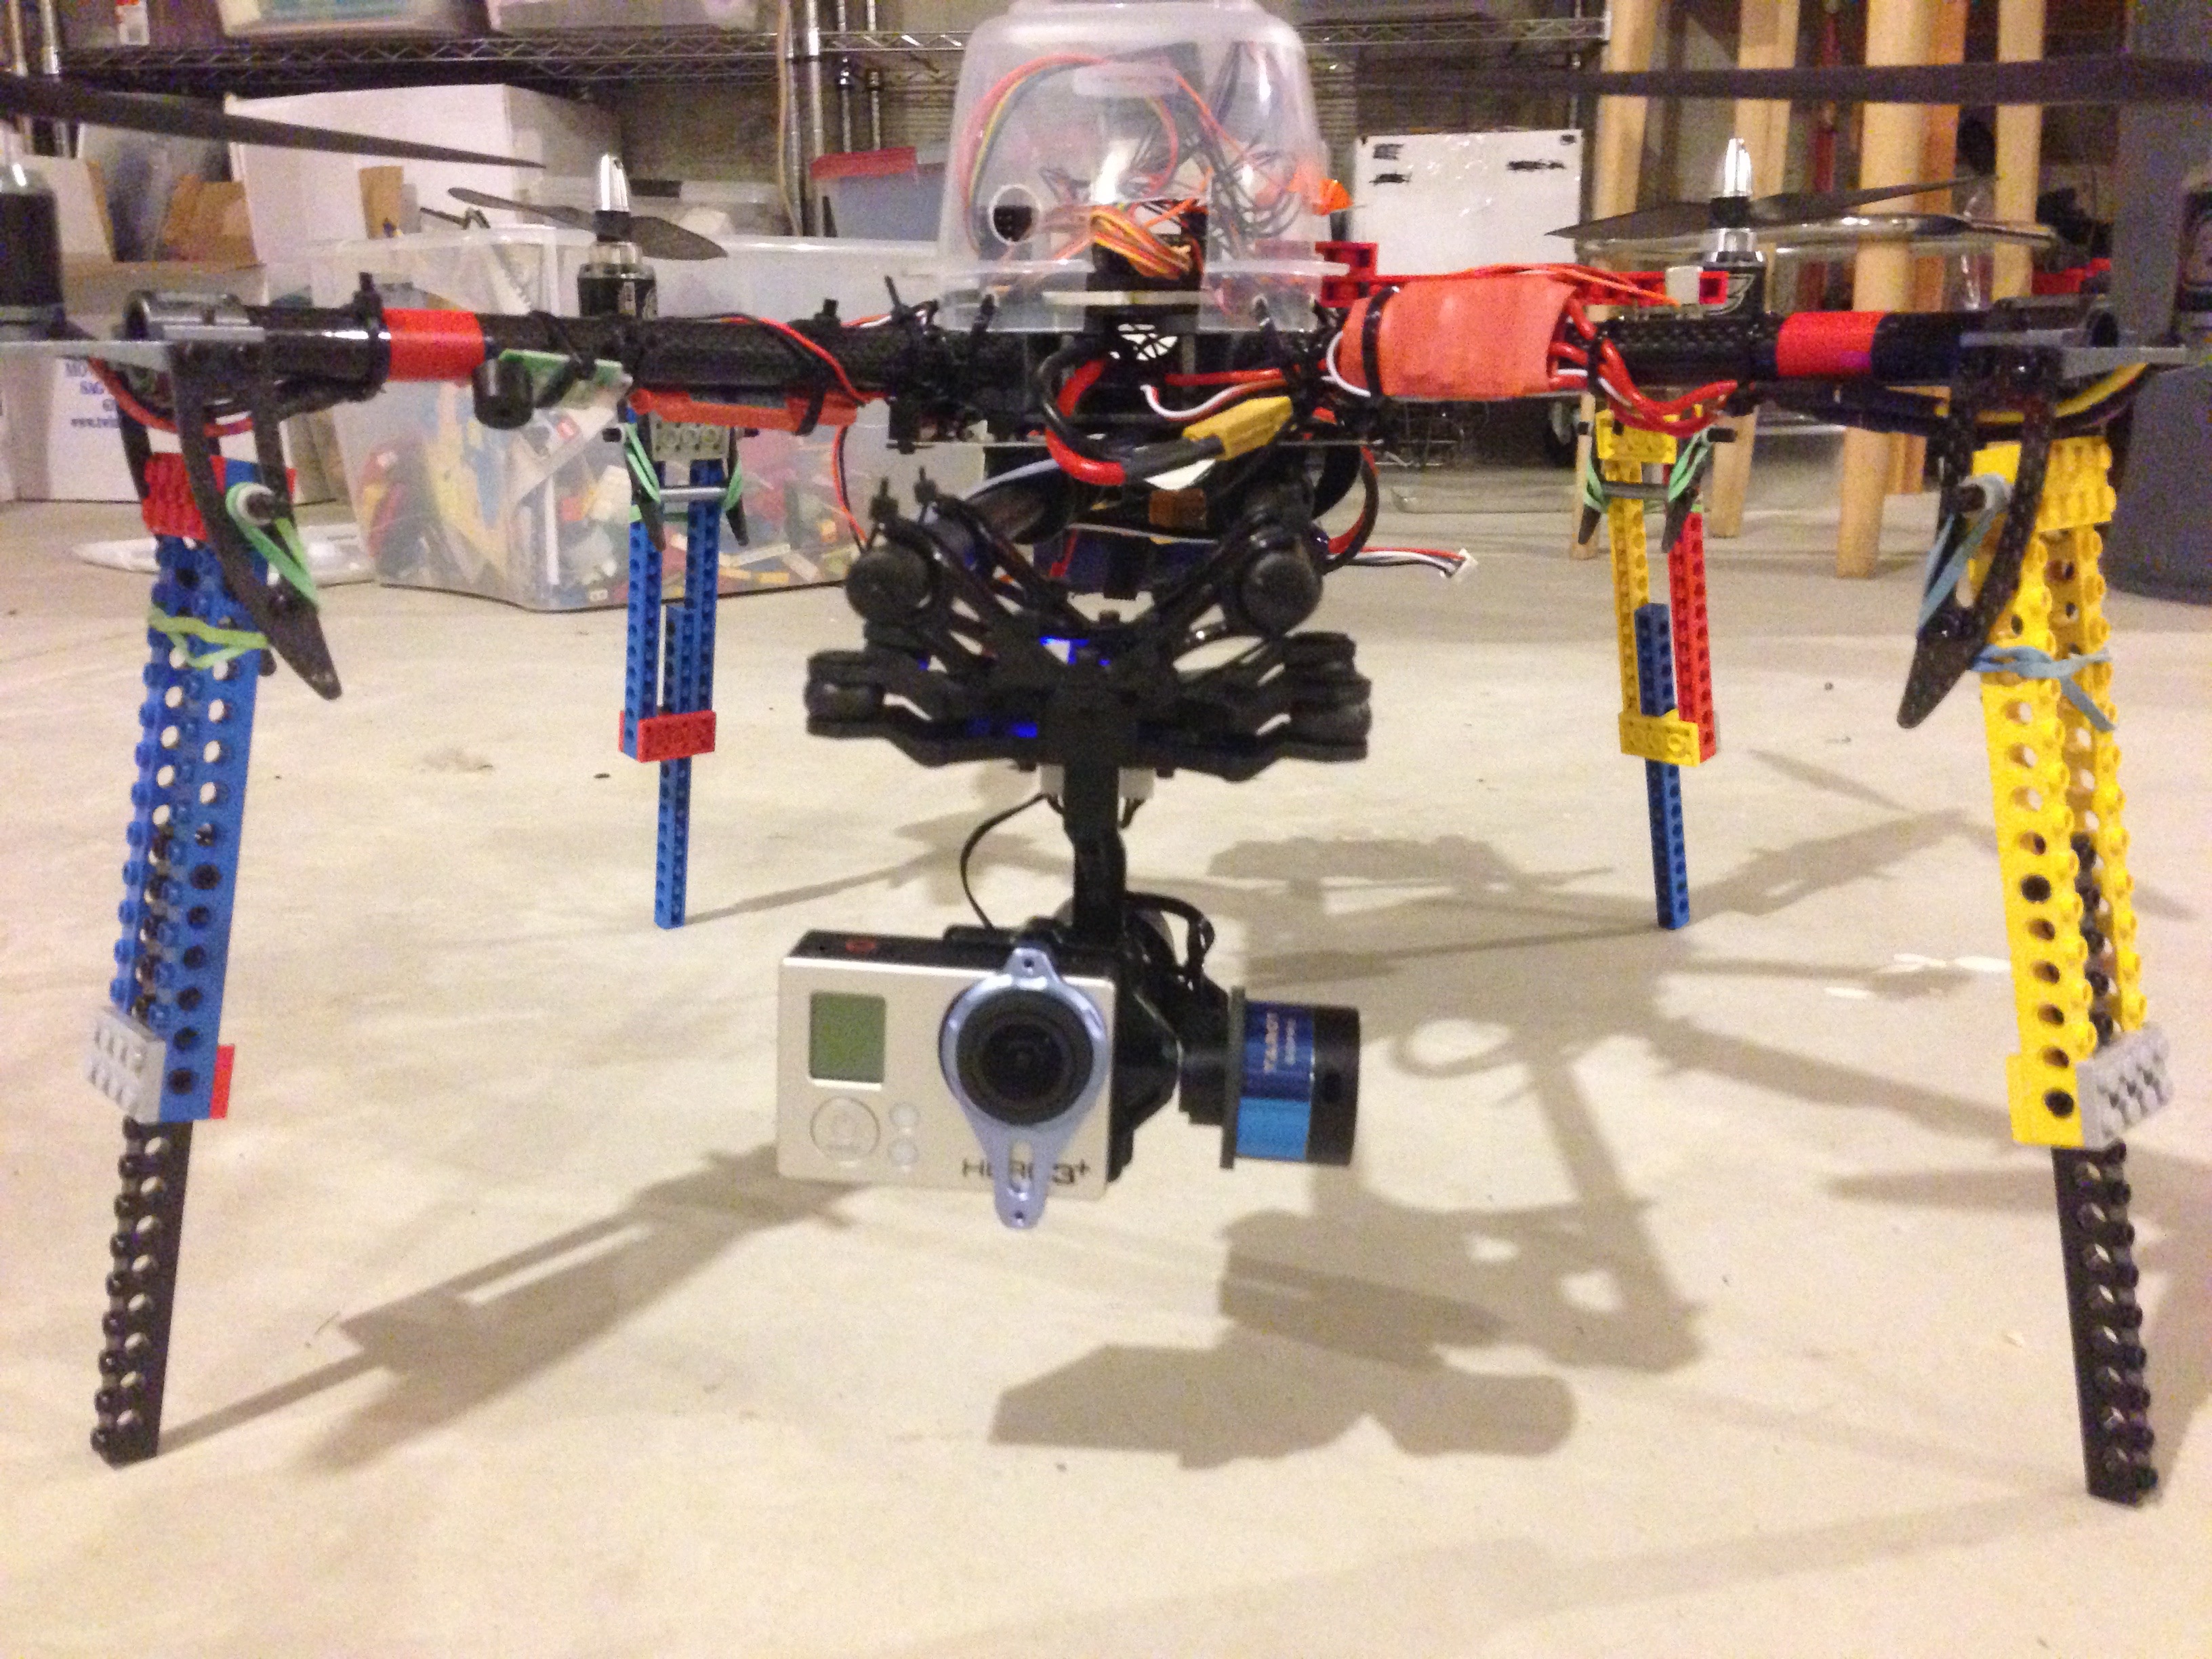 Weekend Project: New Quadcopter Landing Gear